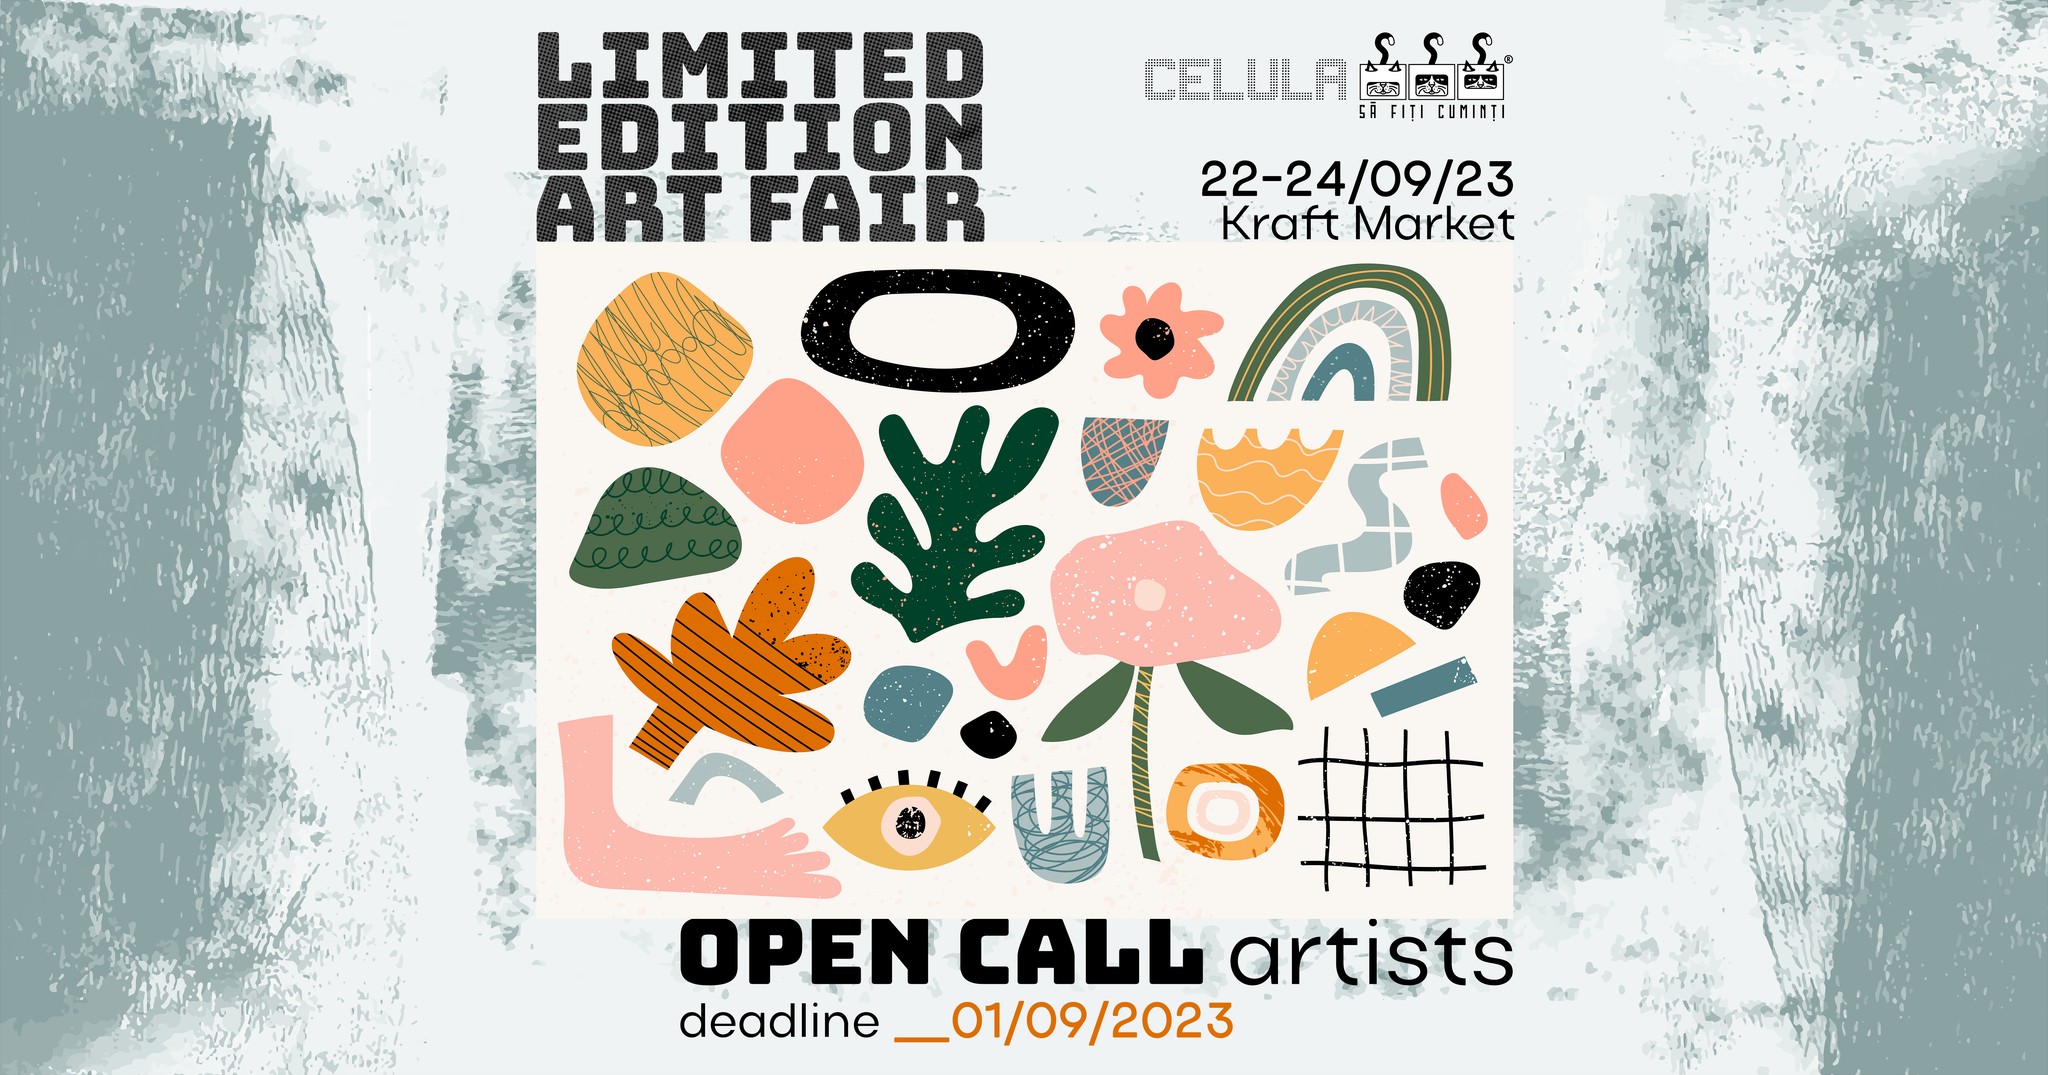 Call for artists LEAF (Limited Edition Art Fair)